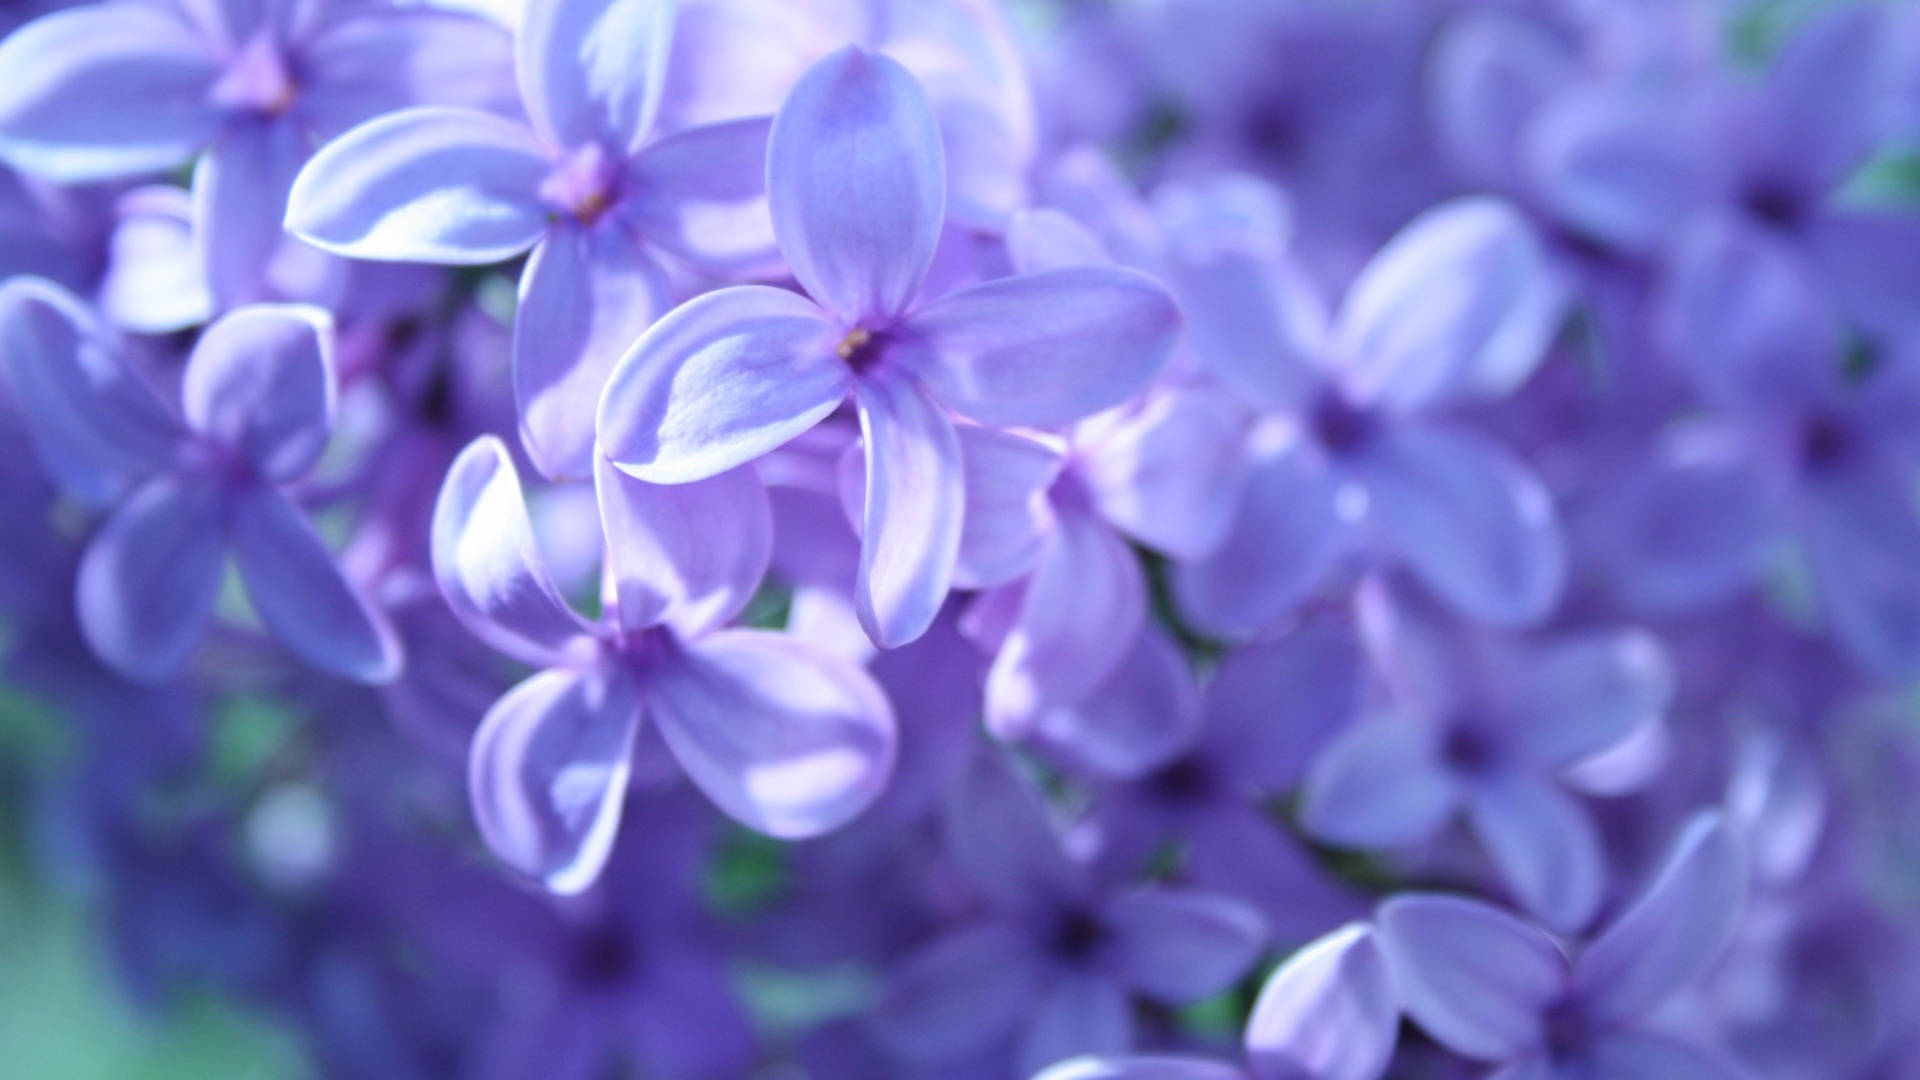 Enjoy the beauty of a vibrant purple flower! Wallpaper